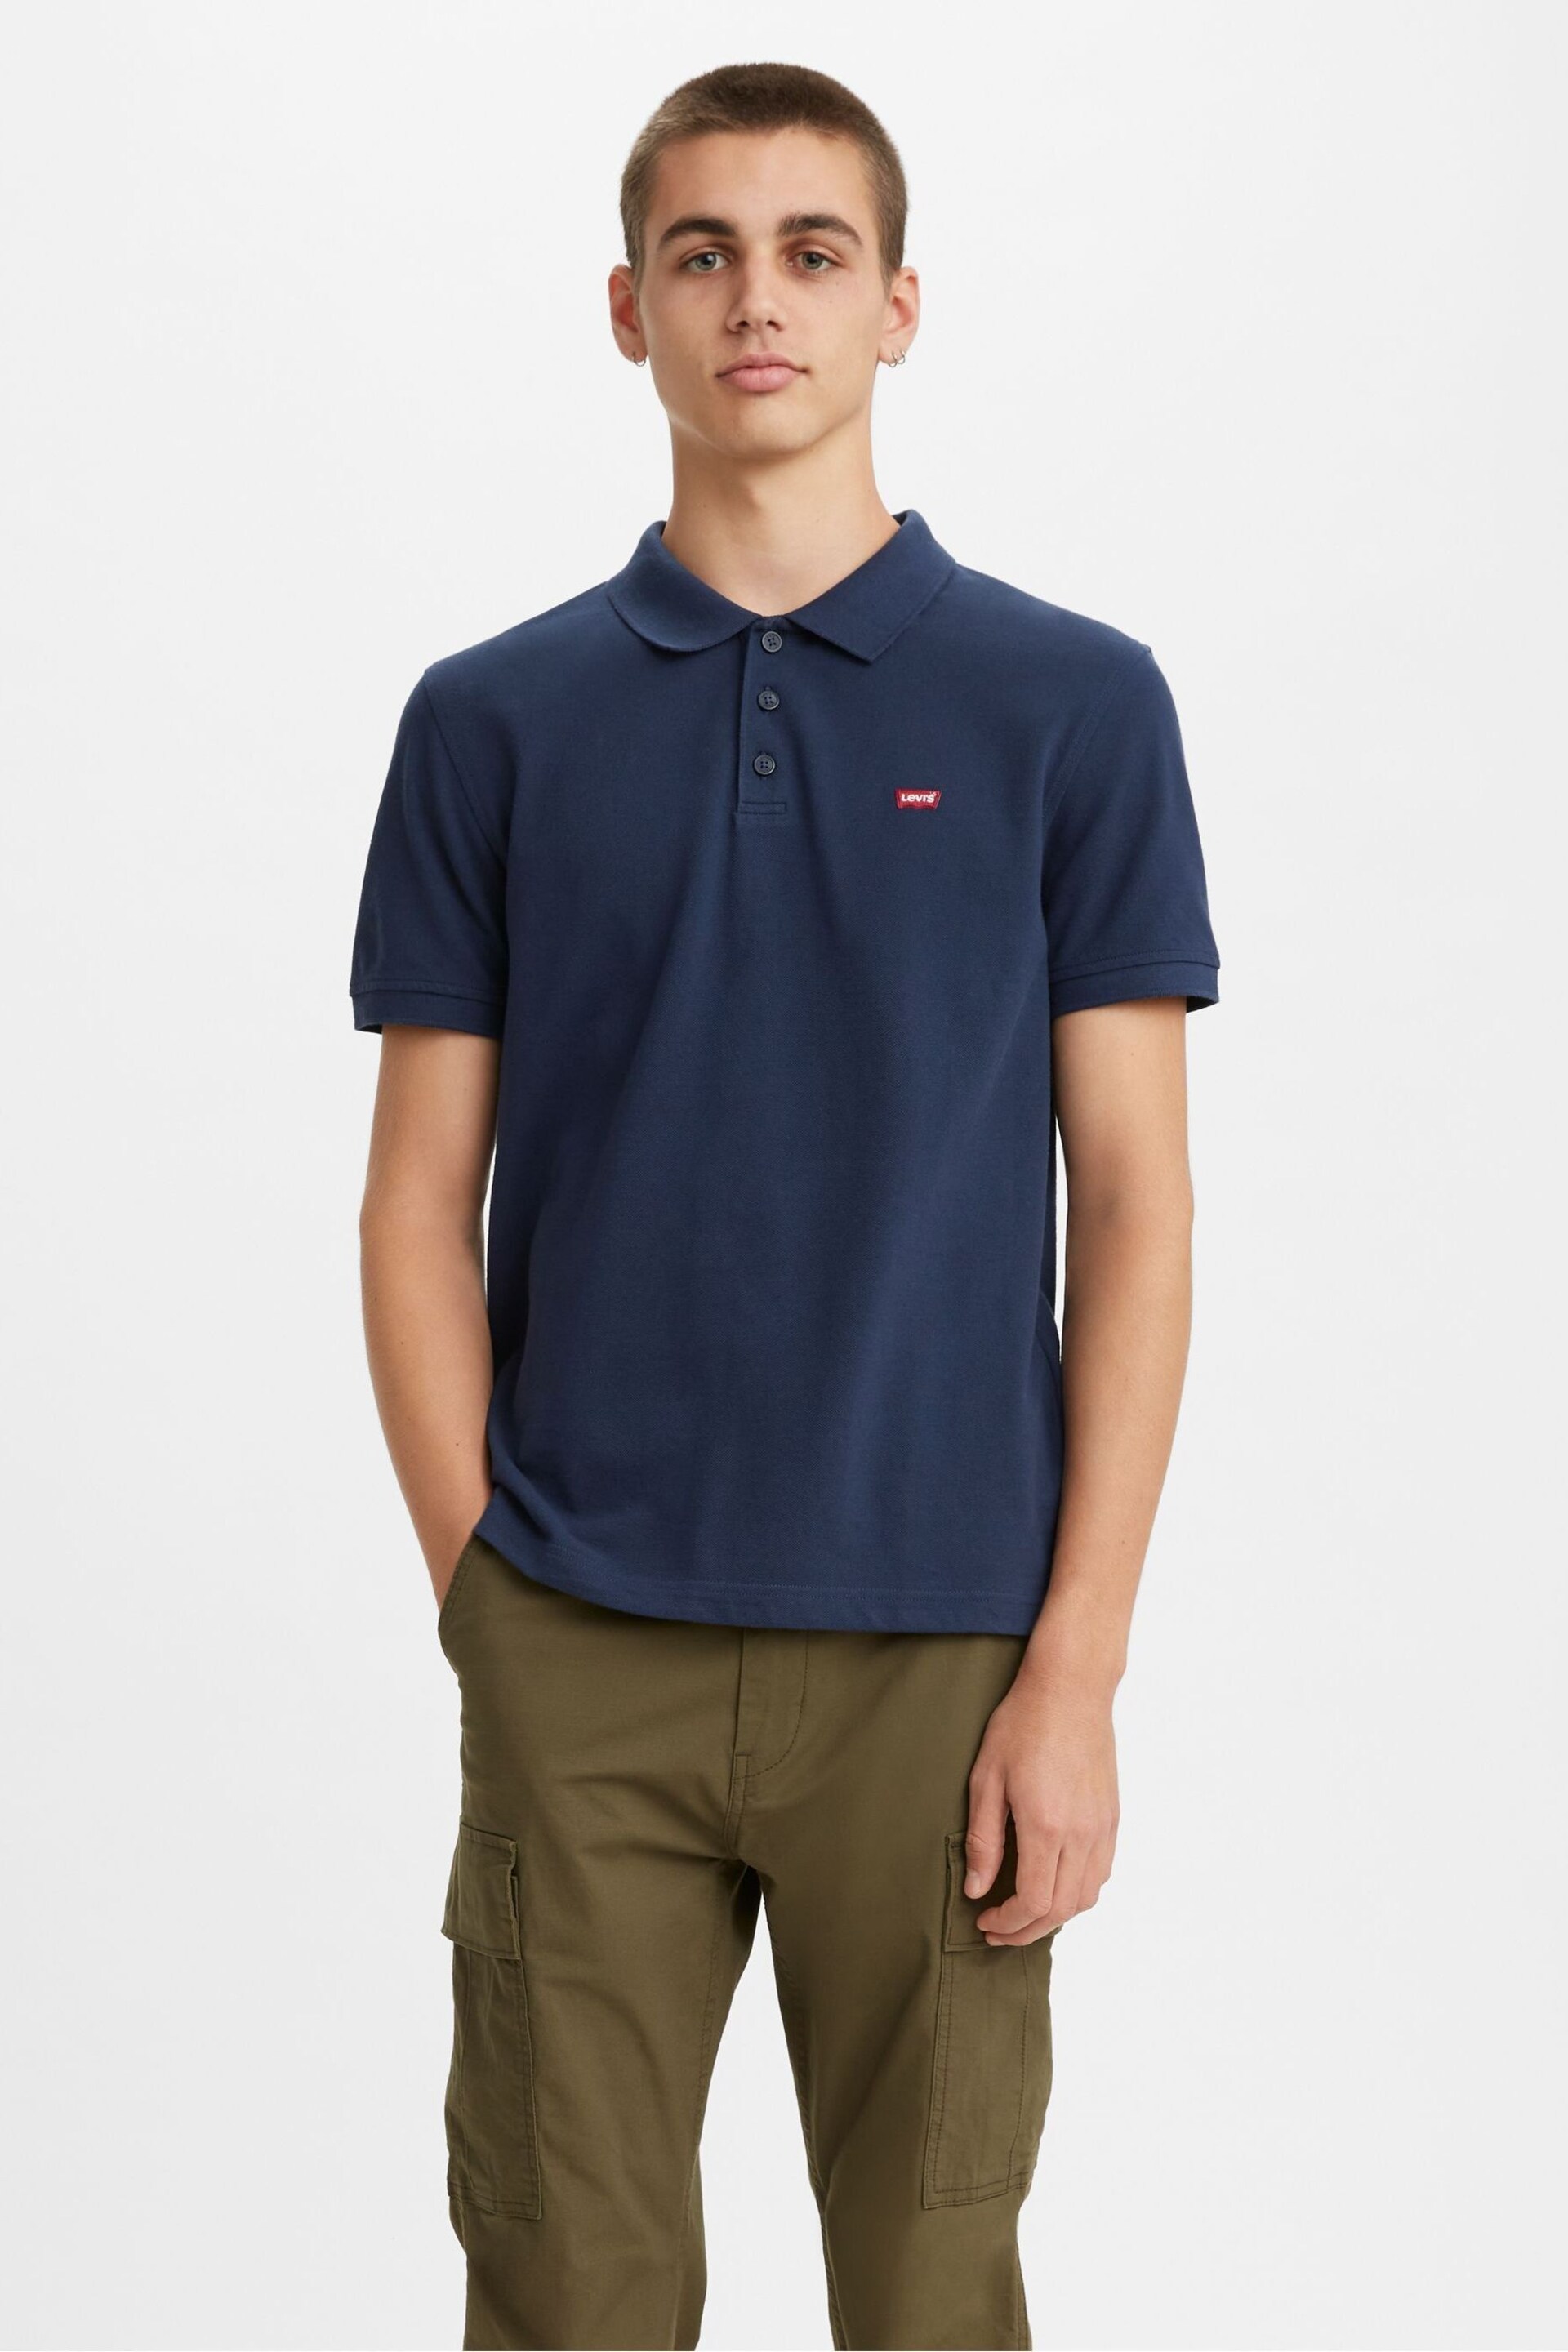 Levi's® Navy Blue Housemark Polo Shirt - Image 1 of 4